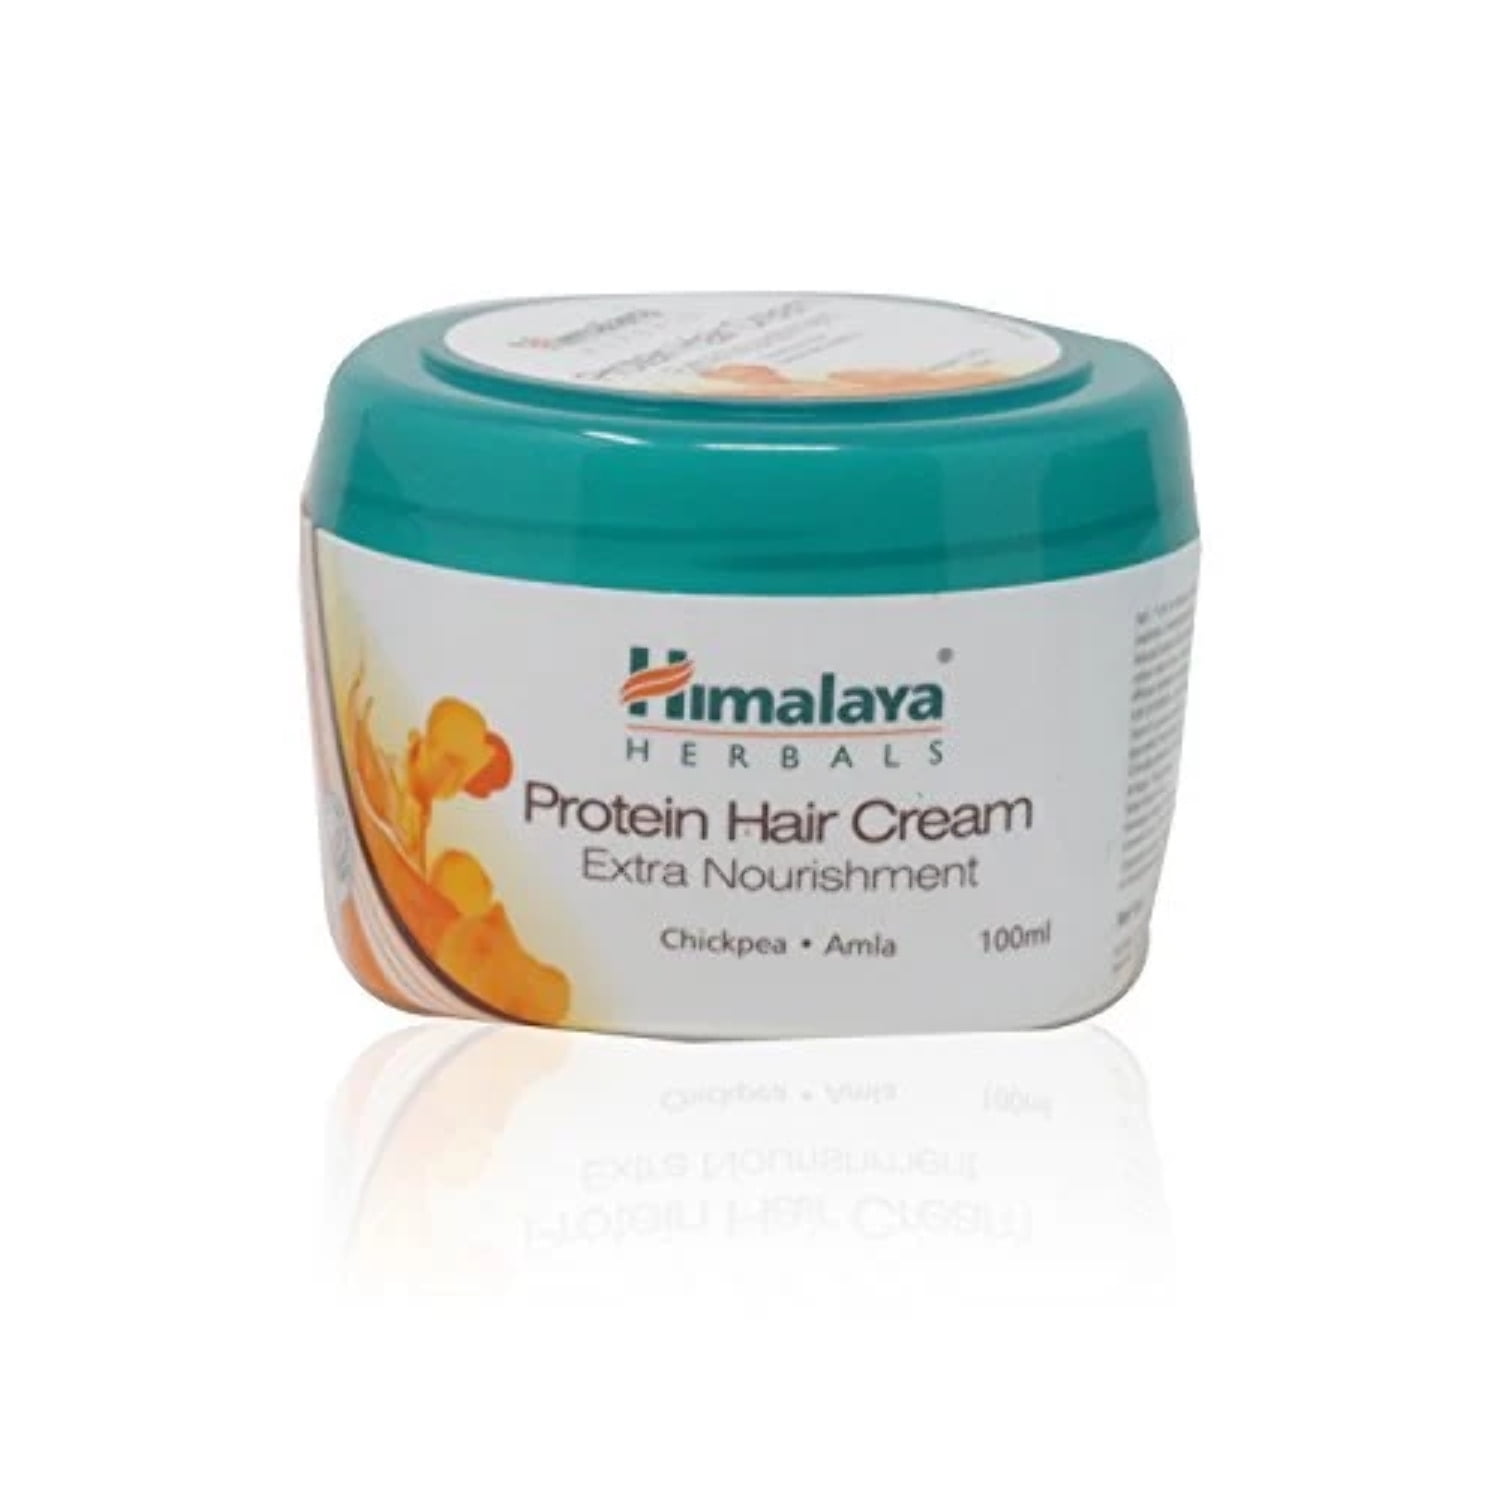 Himalaya Hair Cream - Herbals Protein, 100ml Box 